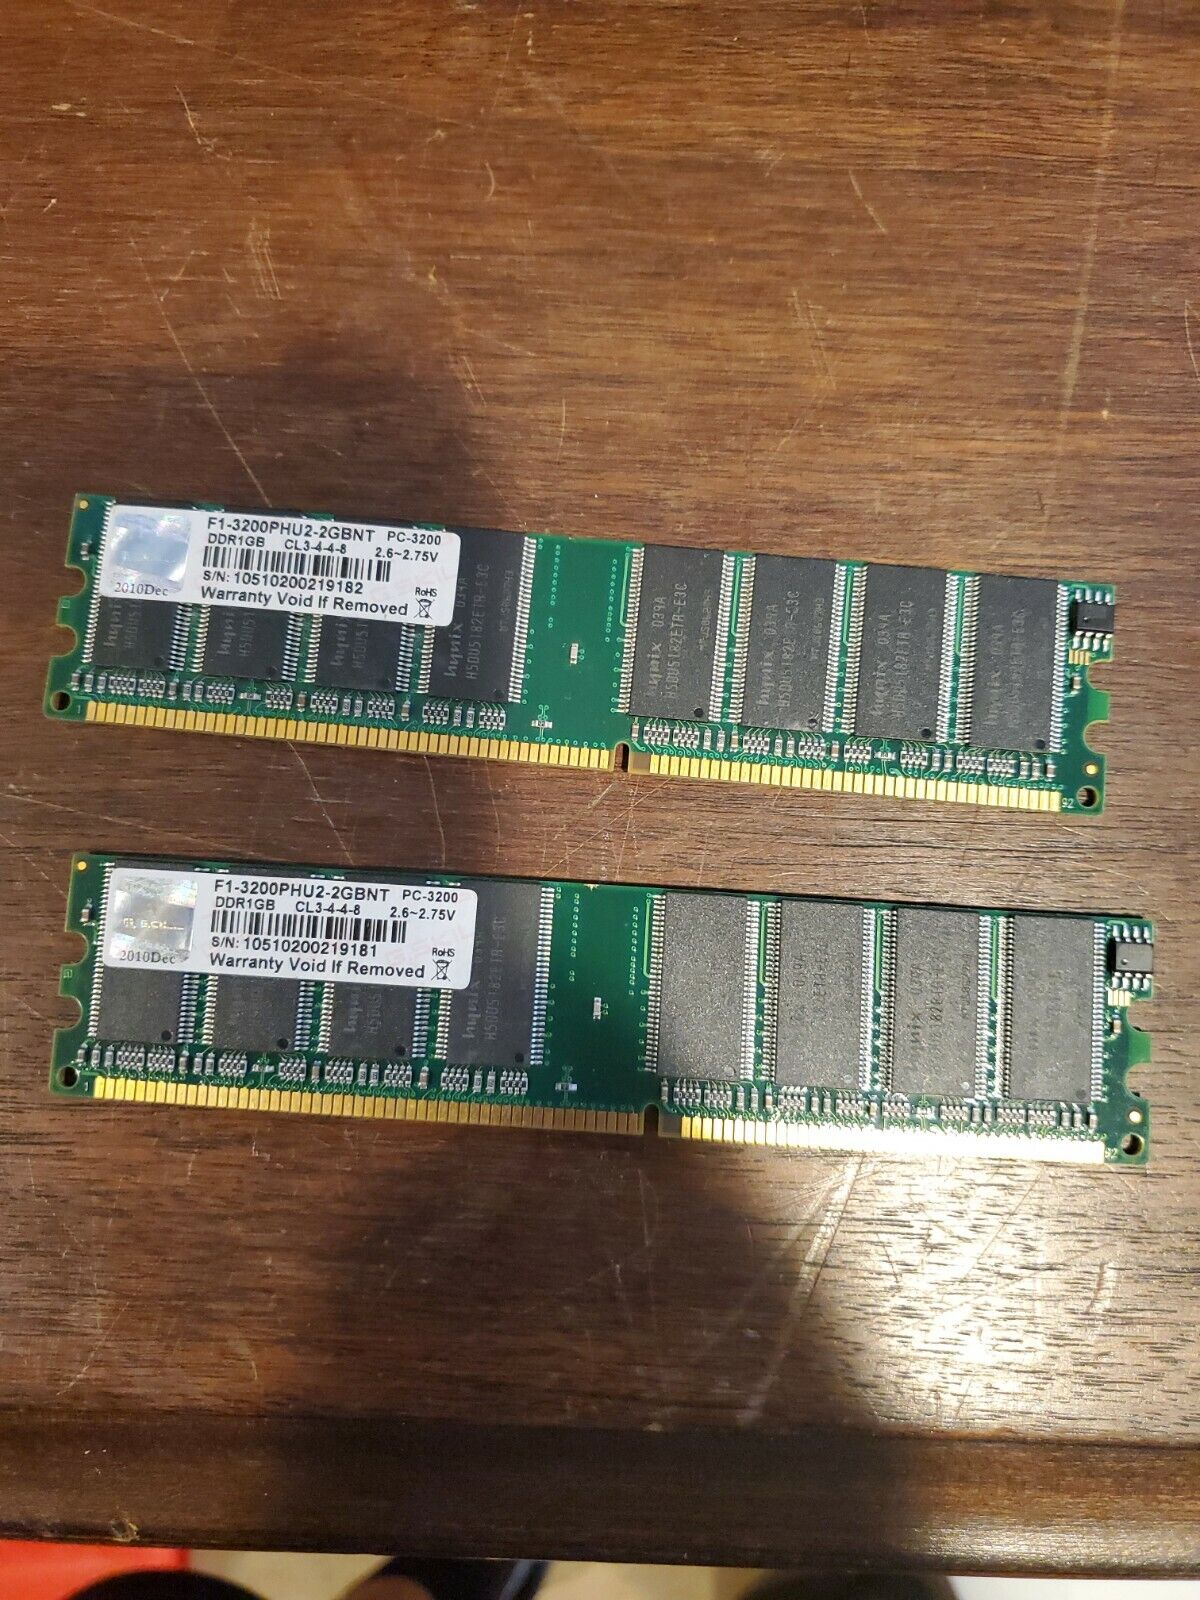 G.Skill PC-3200 1 GB DIMM 400 MHz DDR SDRAM Memory (F1-3200PHU2-2GBNS)